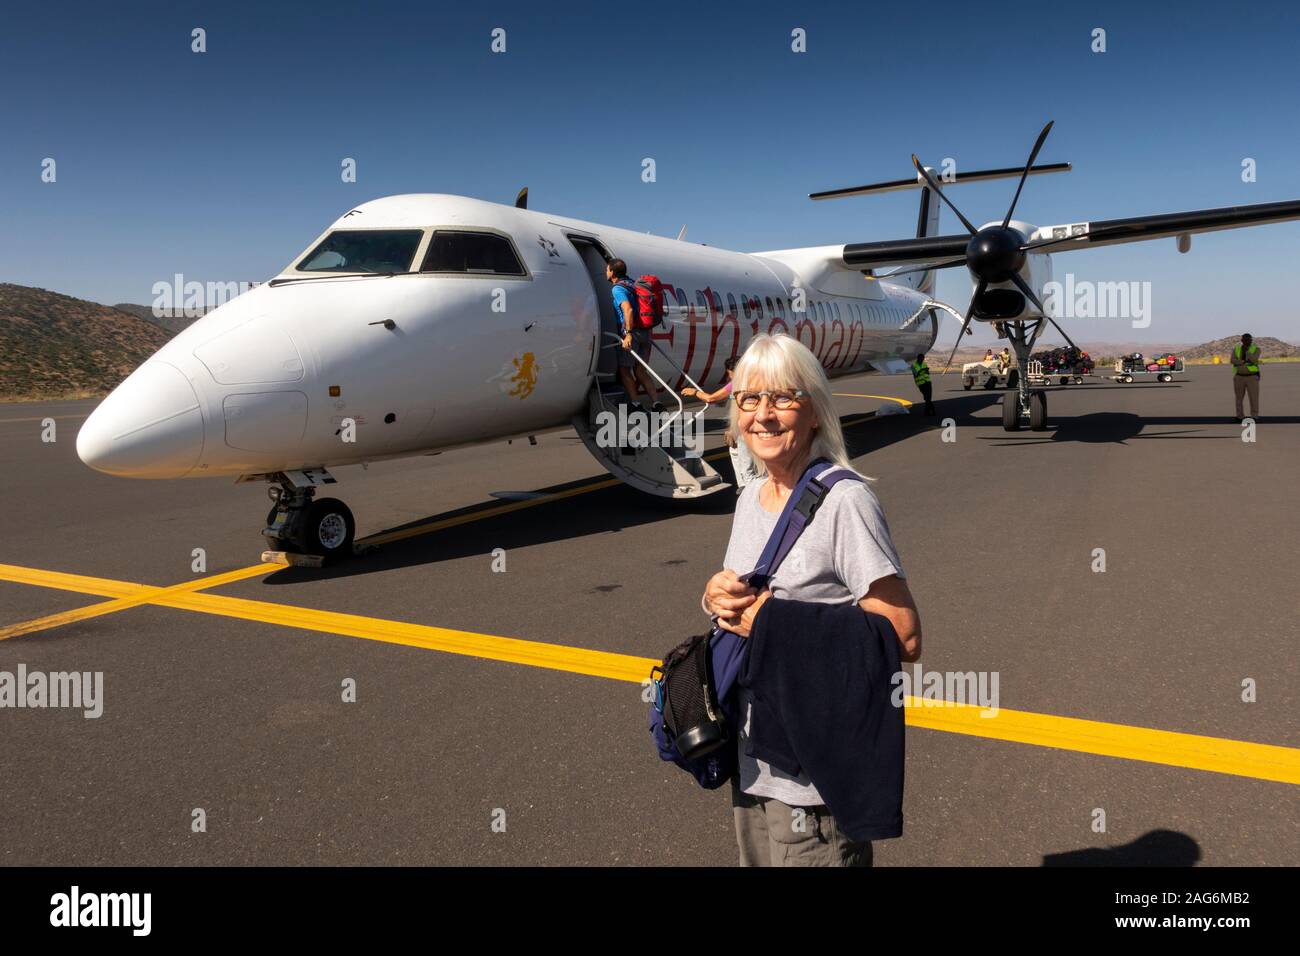 Ethiopia, Amhara, Lalibela, Airport, senior female tourist about to board Ethiopian Airlines Bombardier Q400, Dash 8 aircraft Stock Photo